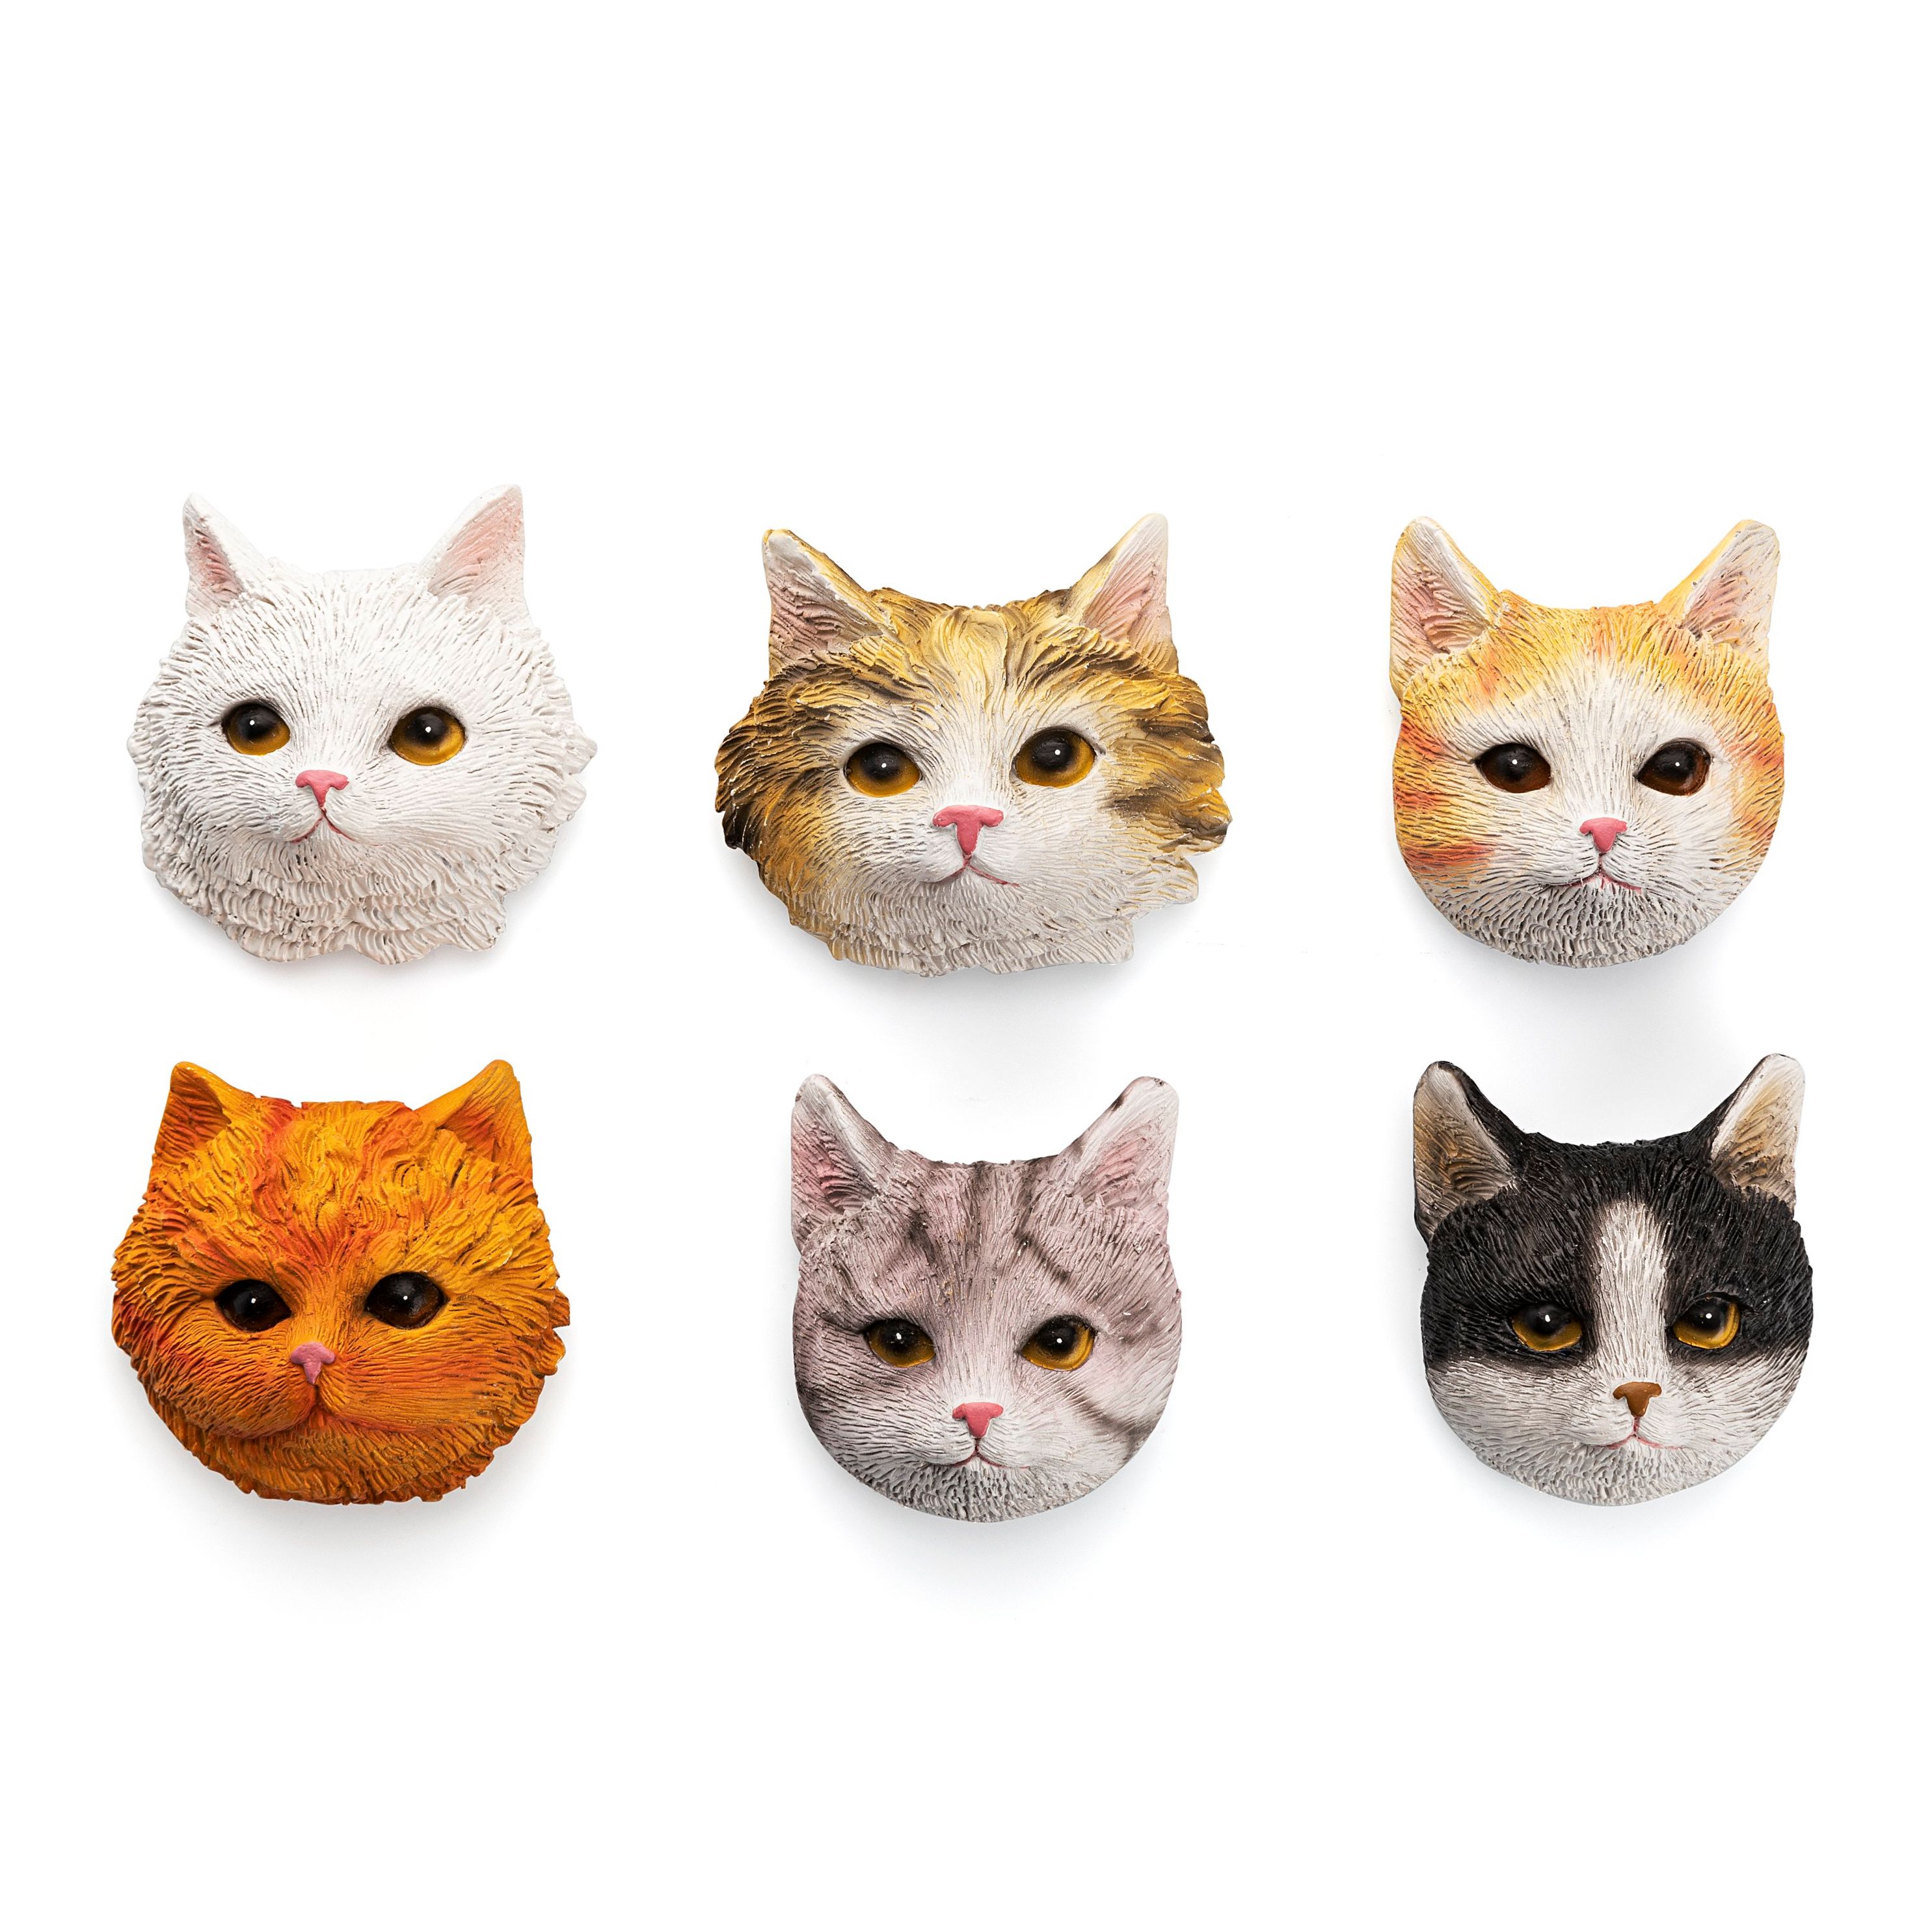 Magnete Katzen 6er Set jetzt bei Weltbild.de bestellen